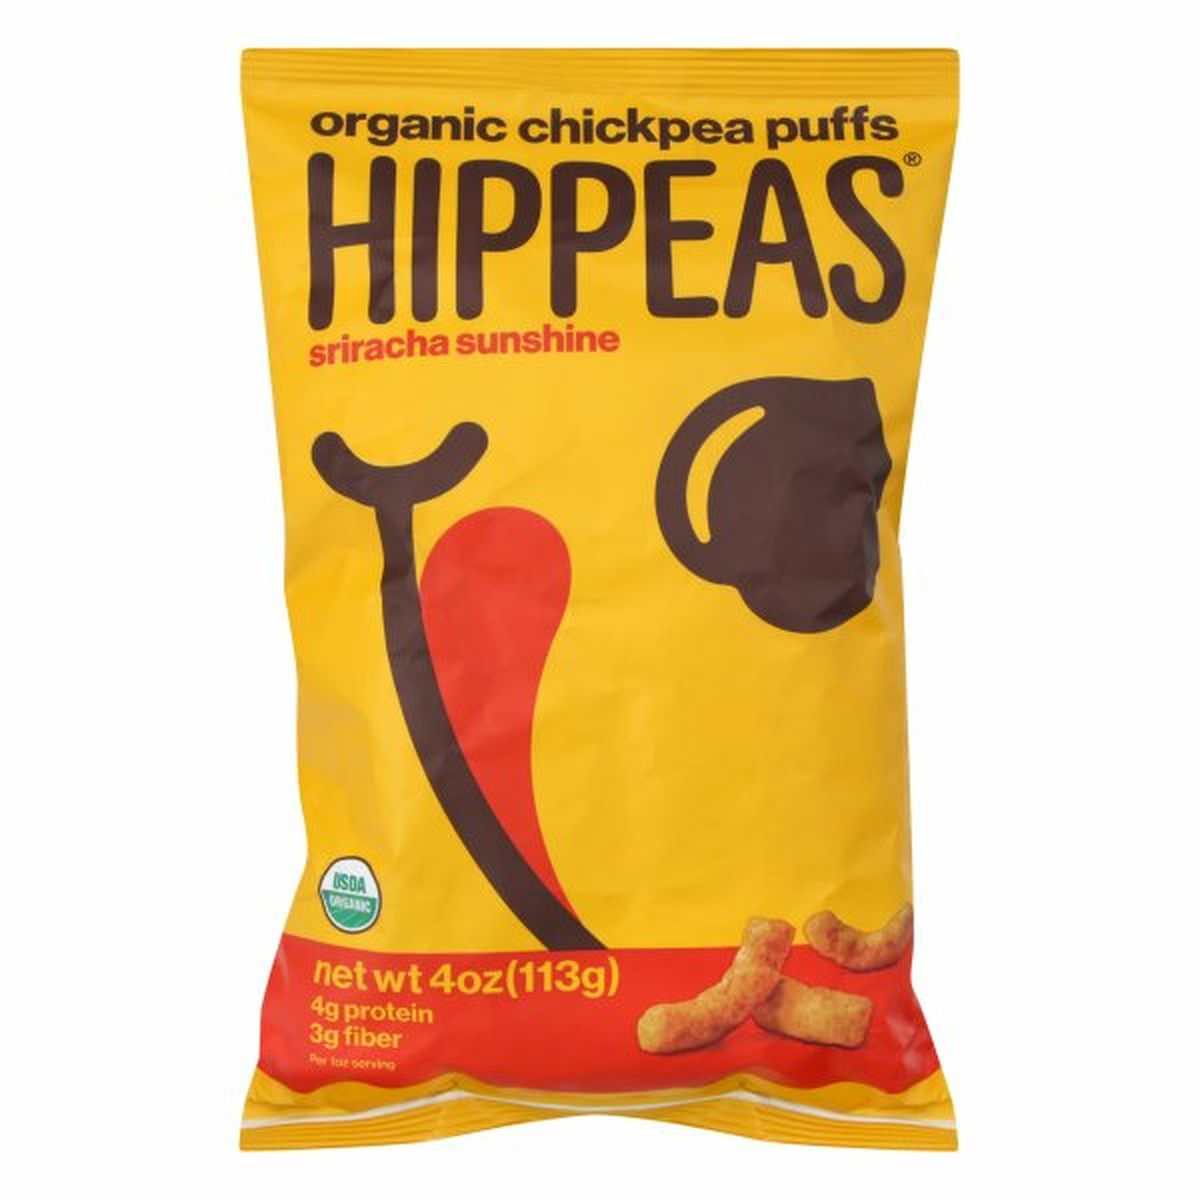 Calories in Hippeas Chickpea Puffs, Organic, Sriracha Sunshine